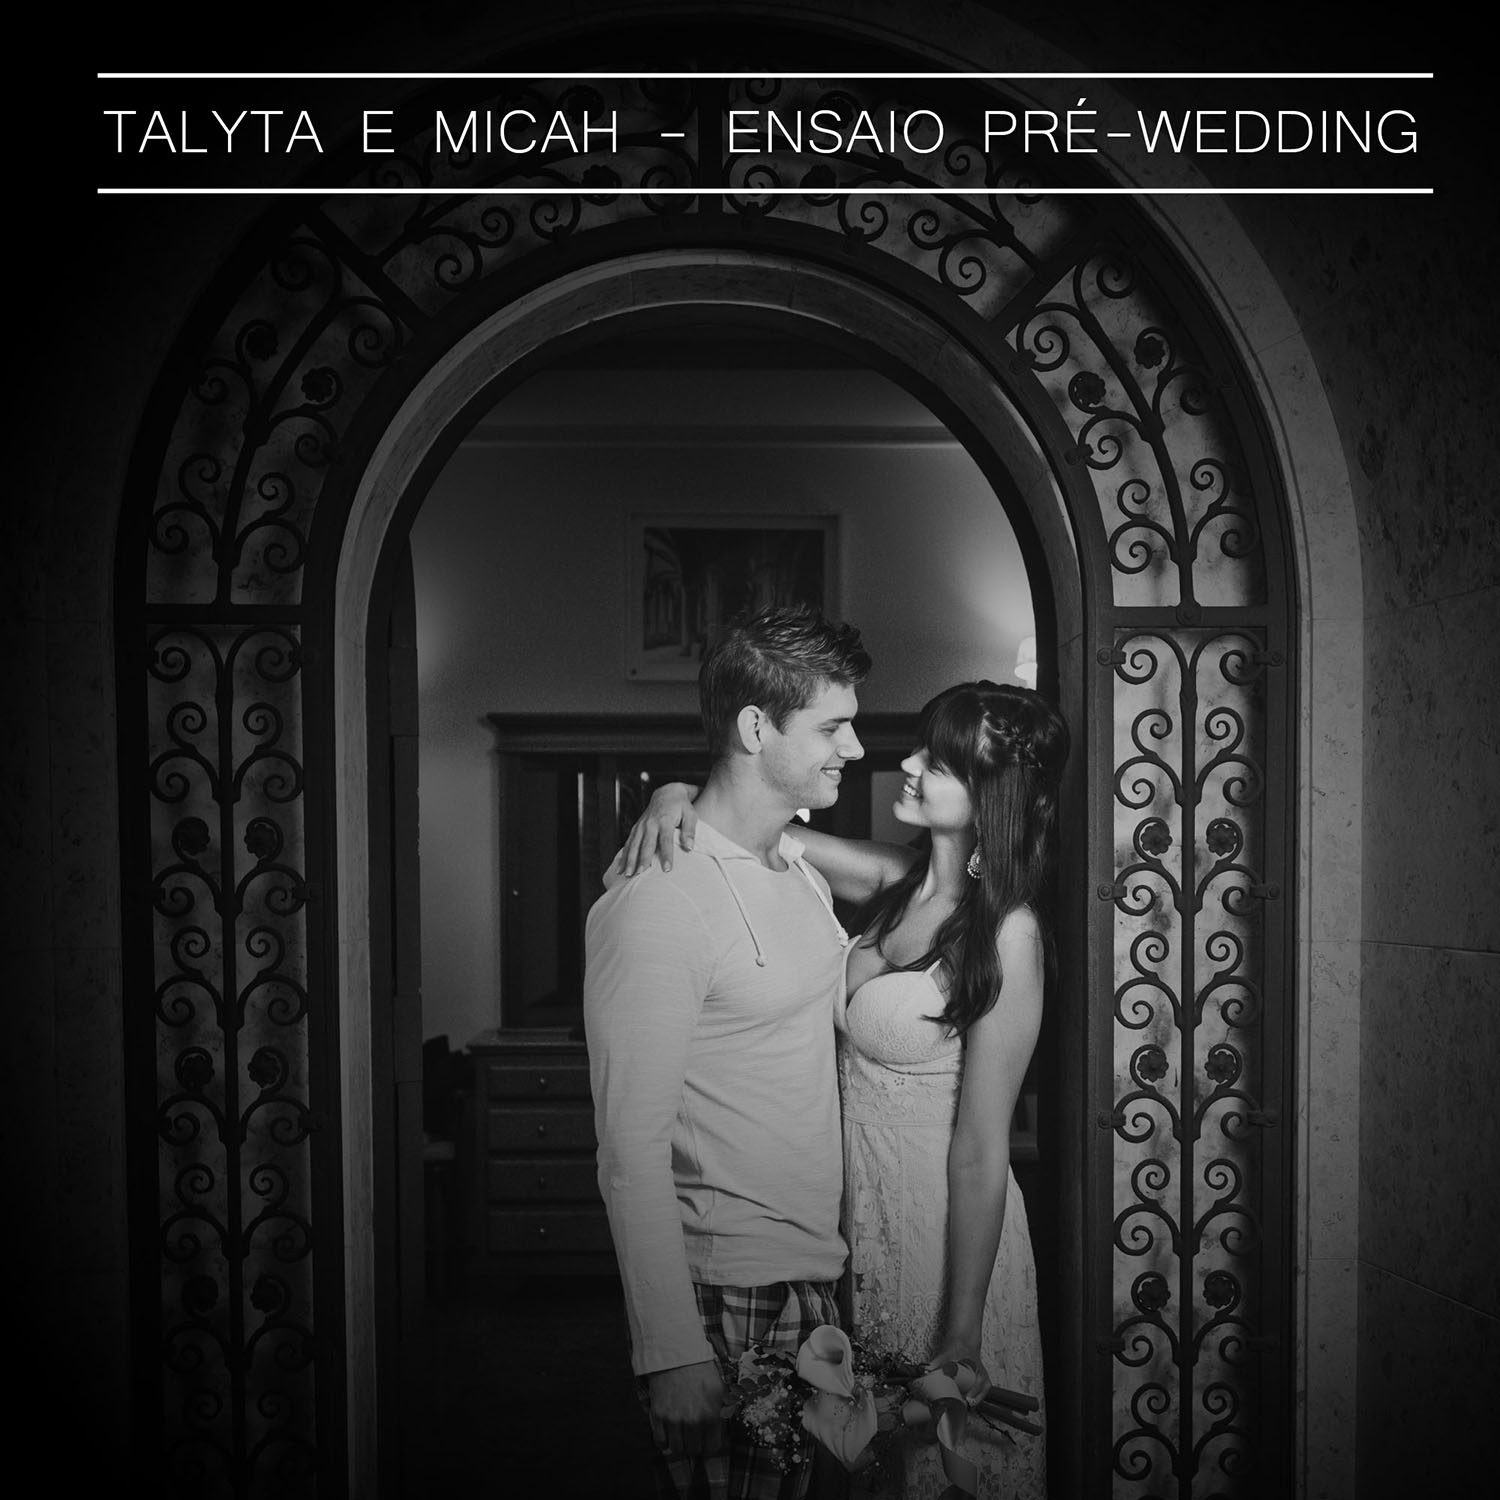 ENSAIO PRÃ-WEDDING - TALYTA E MICAH